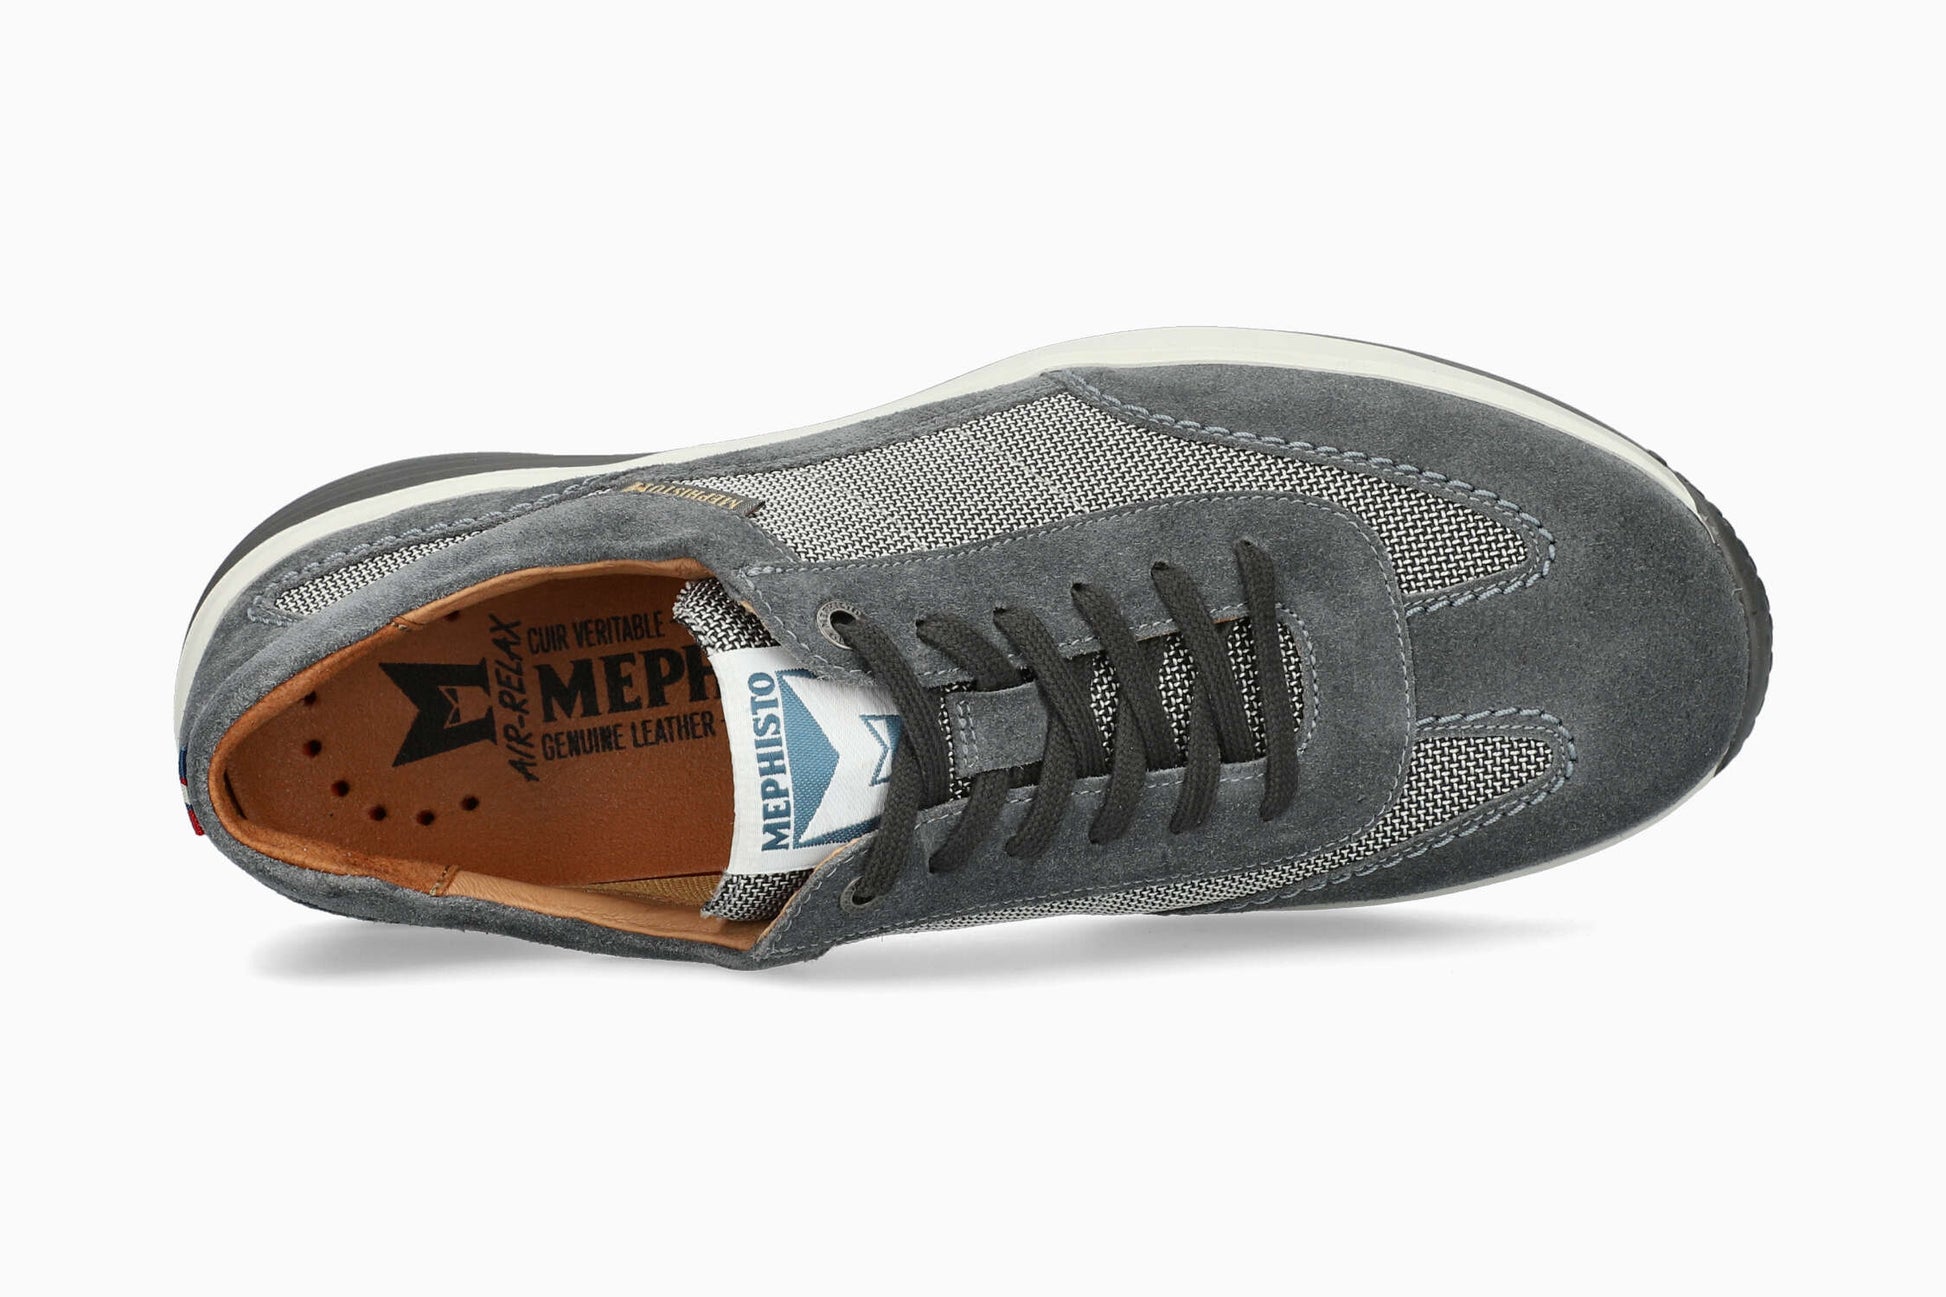 Mephisto Steve Air zapatos sport hombre en color taupe